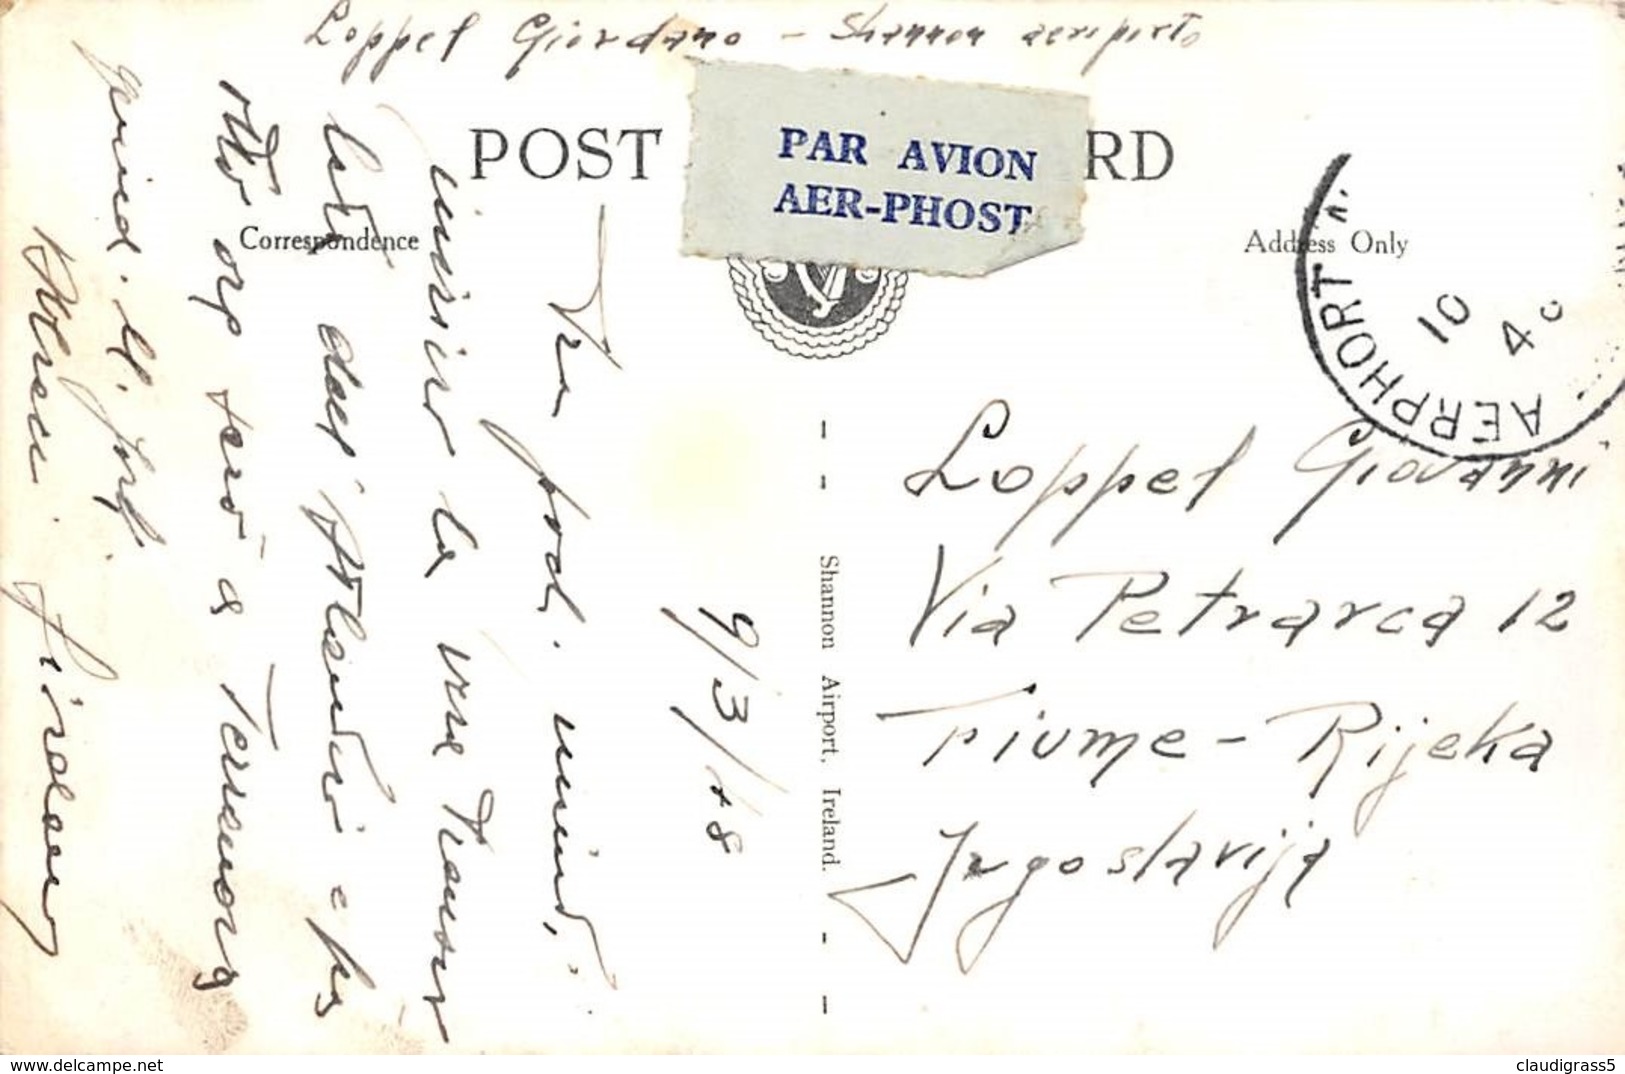 0376 "SHANNON AIRPORT - RINEANNA IRELAND" ANIMATA, AUTO ED ARERI AD ELICA ANNI '40. CART. ORIG. SPED. 1948 - Clare